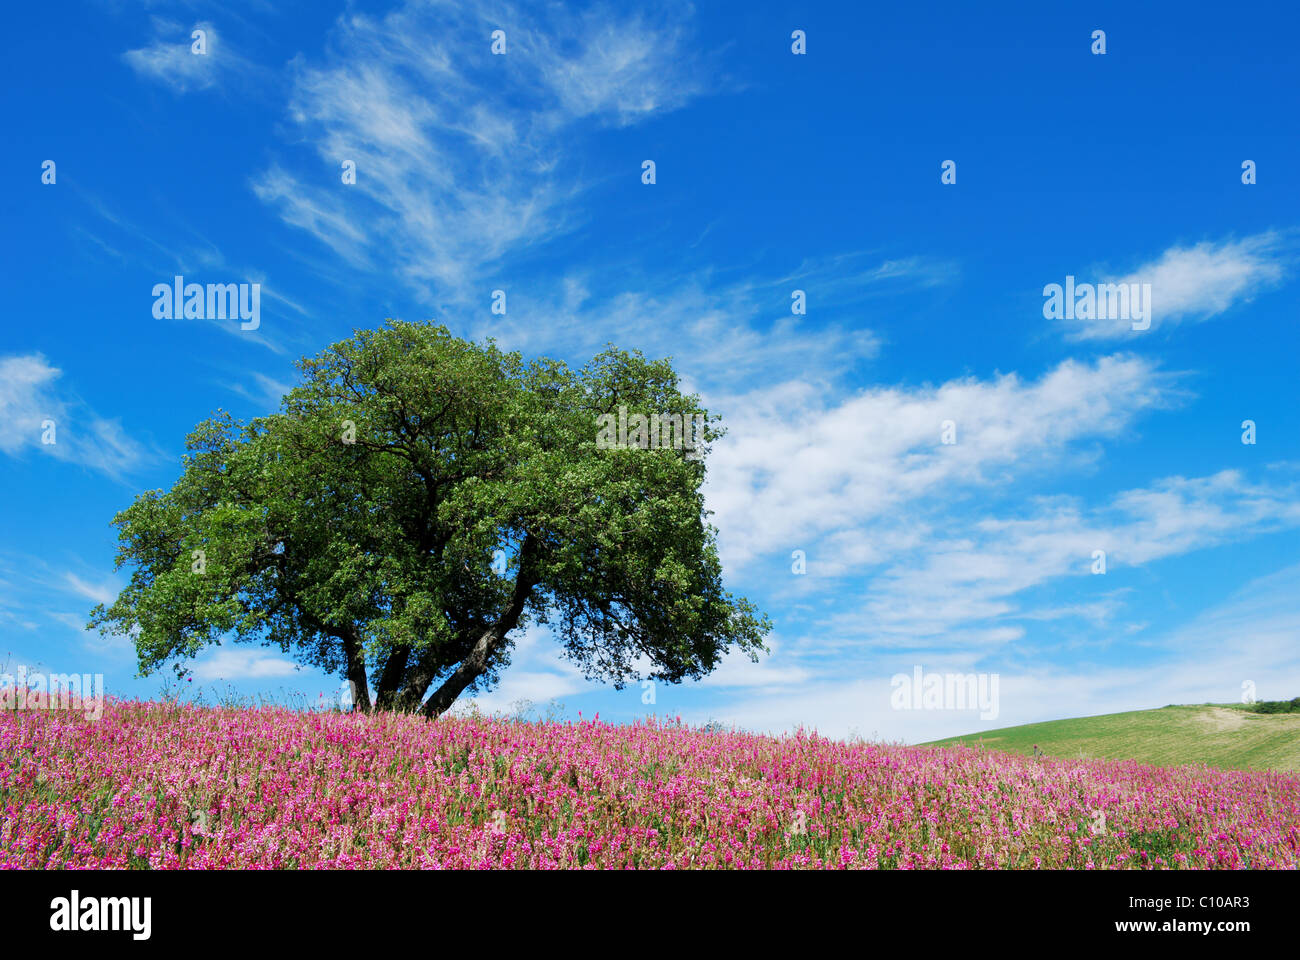 Large oak tree in flowered springtime field under blue sky Stock Photo